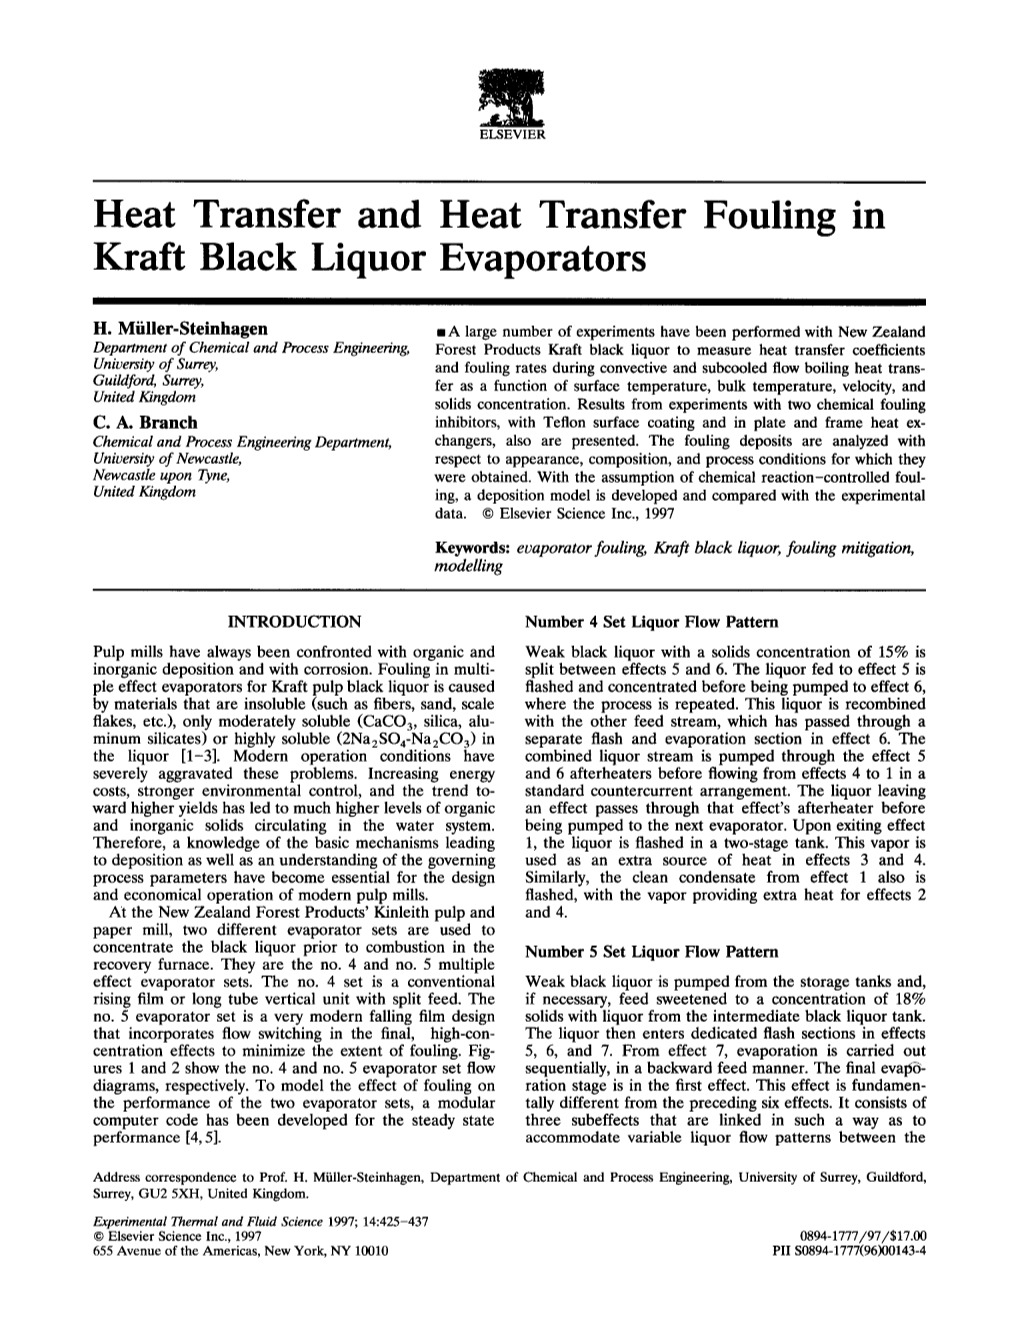 Heat Transfer and Heat Transfer Fouling in Kraft Black Liquor Evaporators